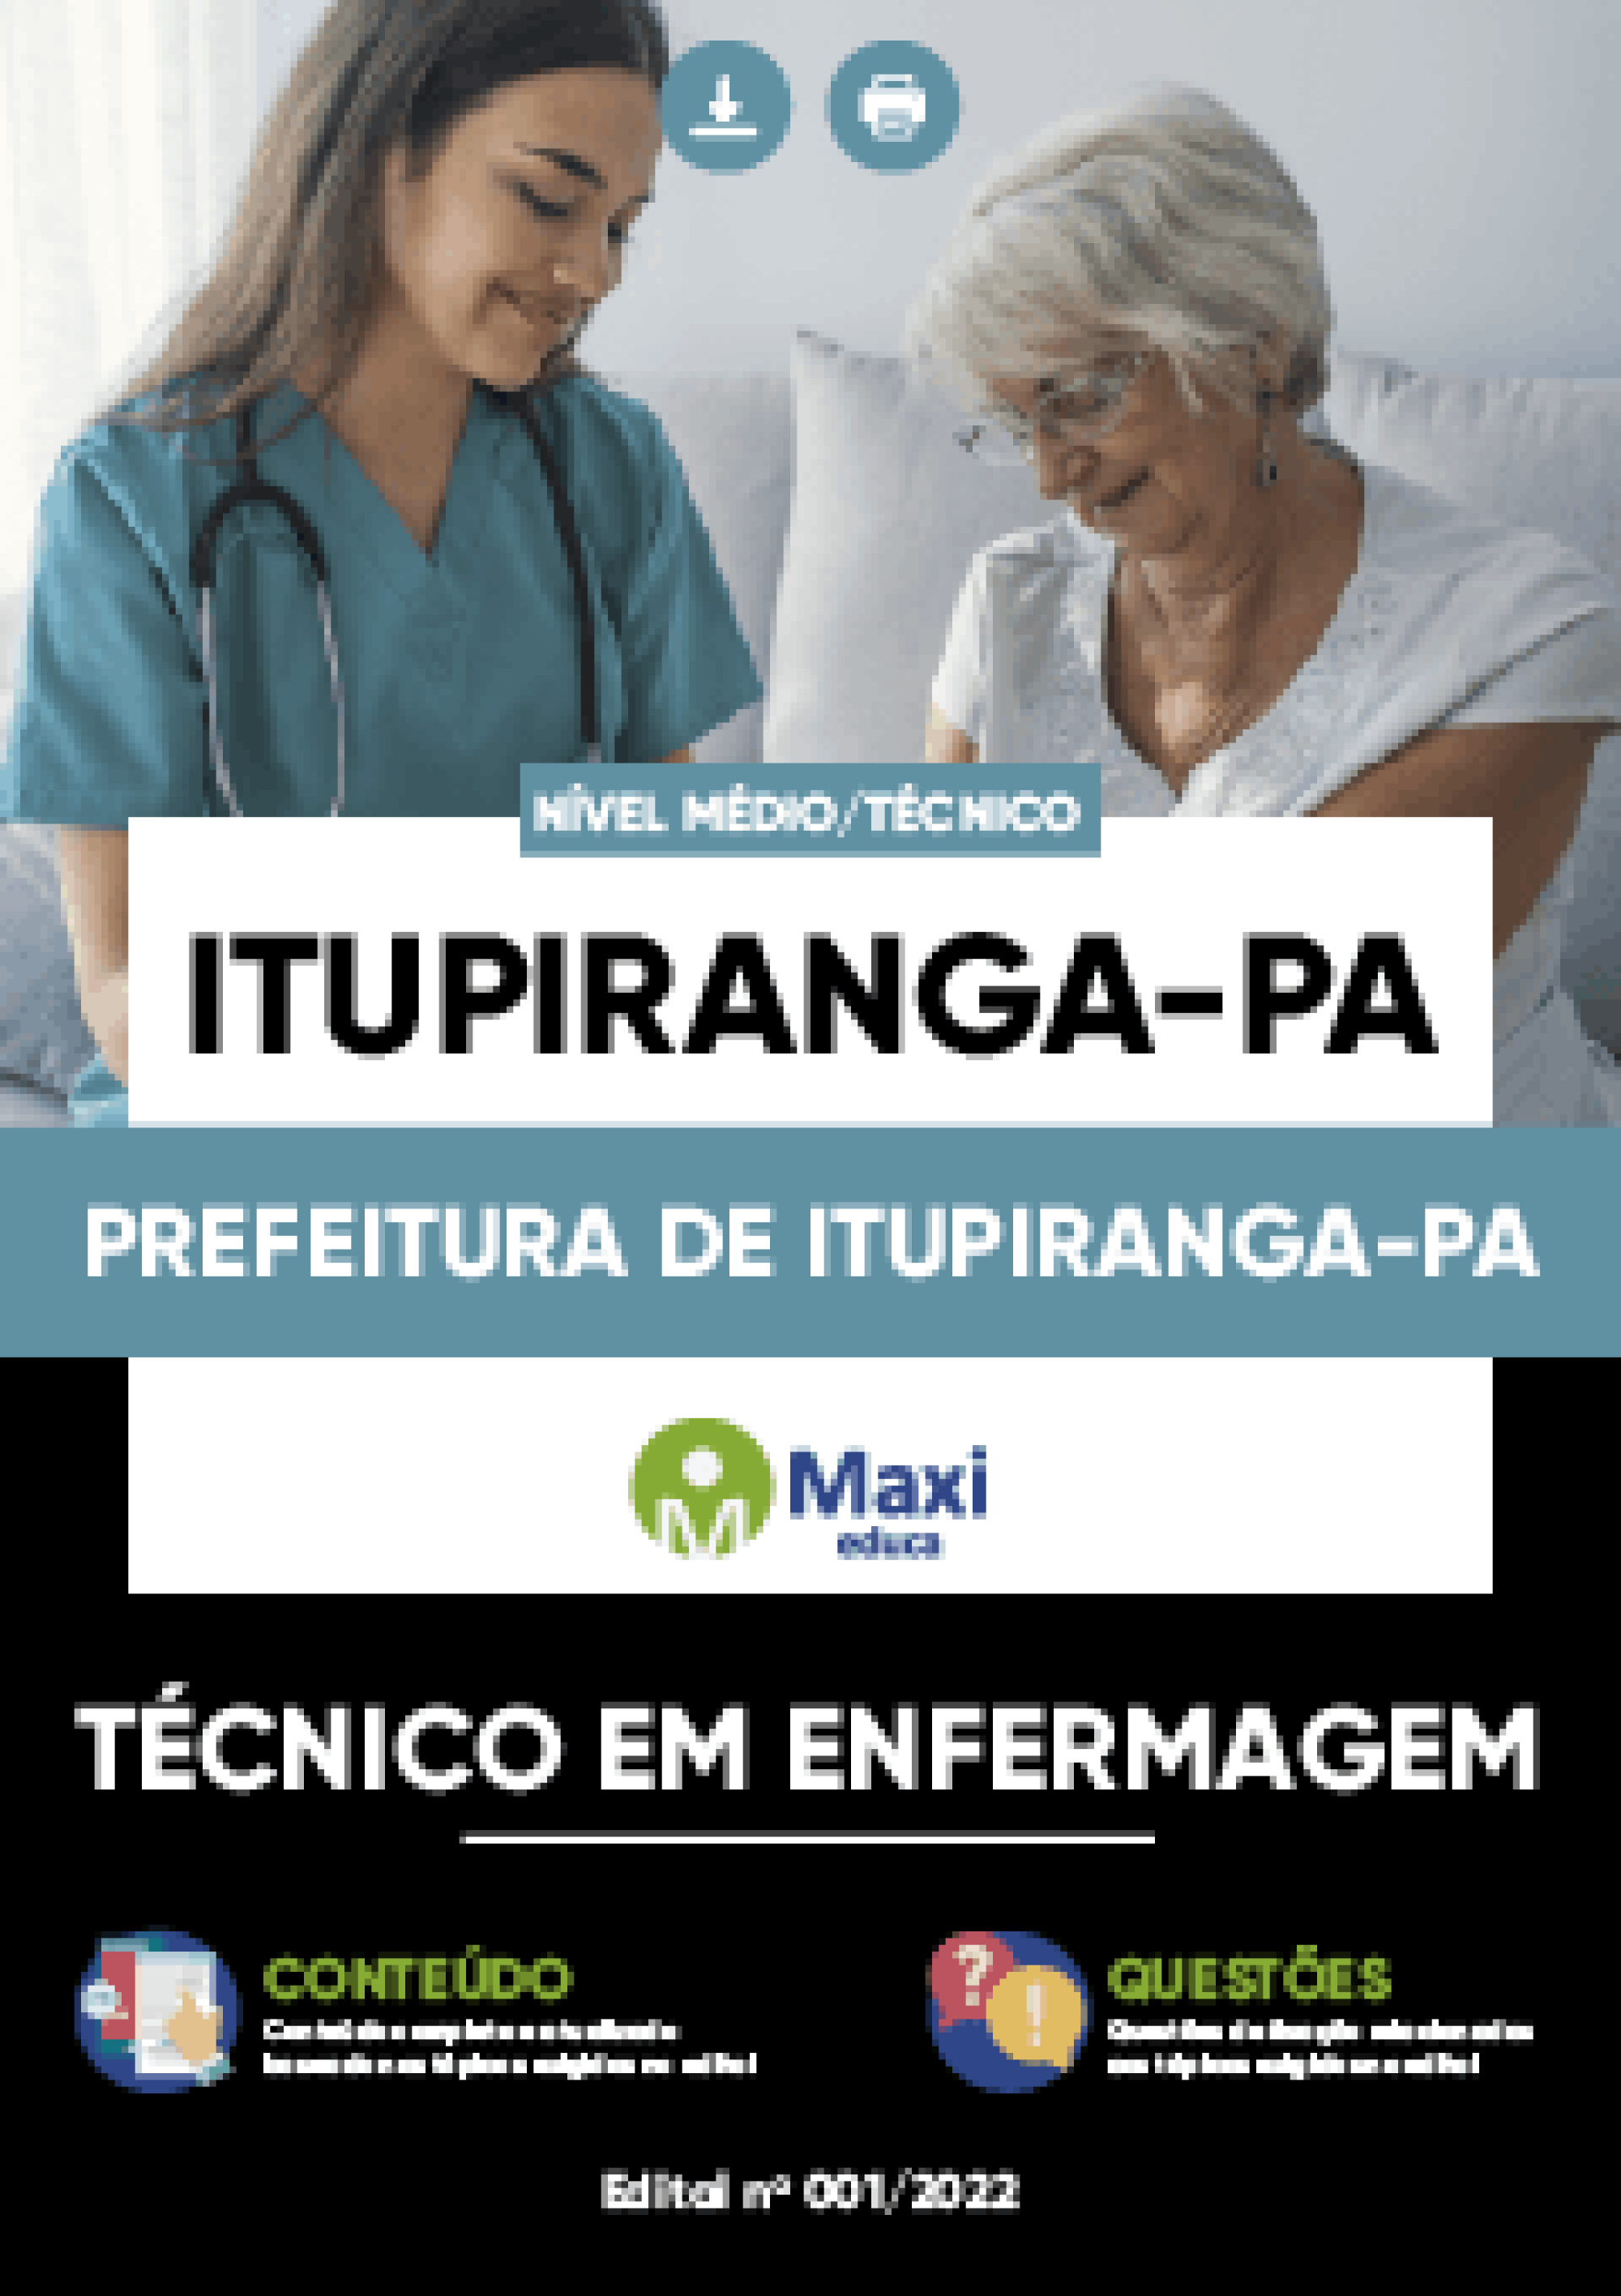 Apostila Digital em PDF da Prefeitura de Itupiranga-PA